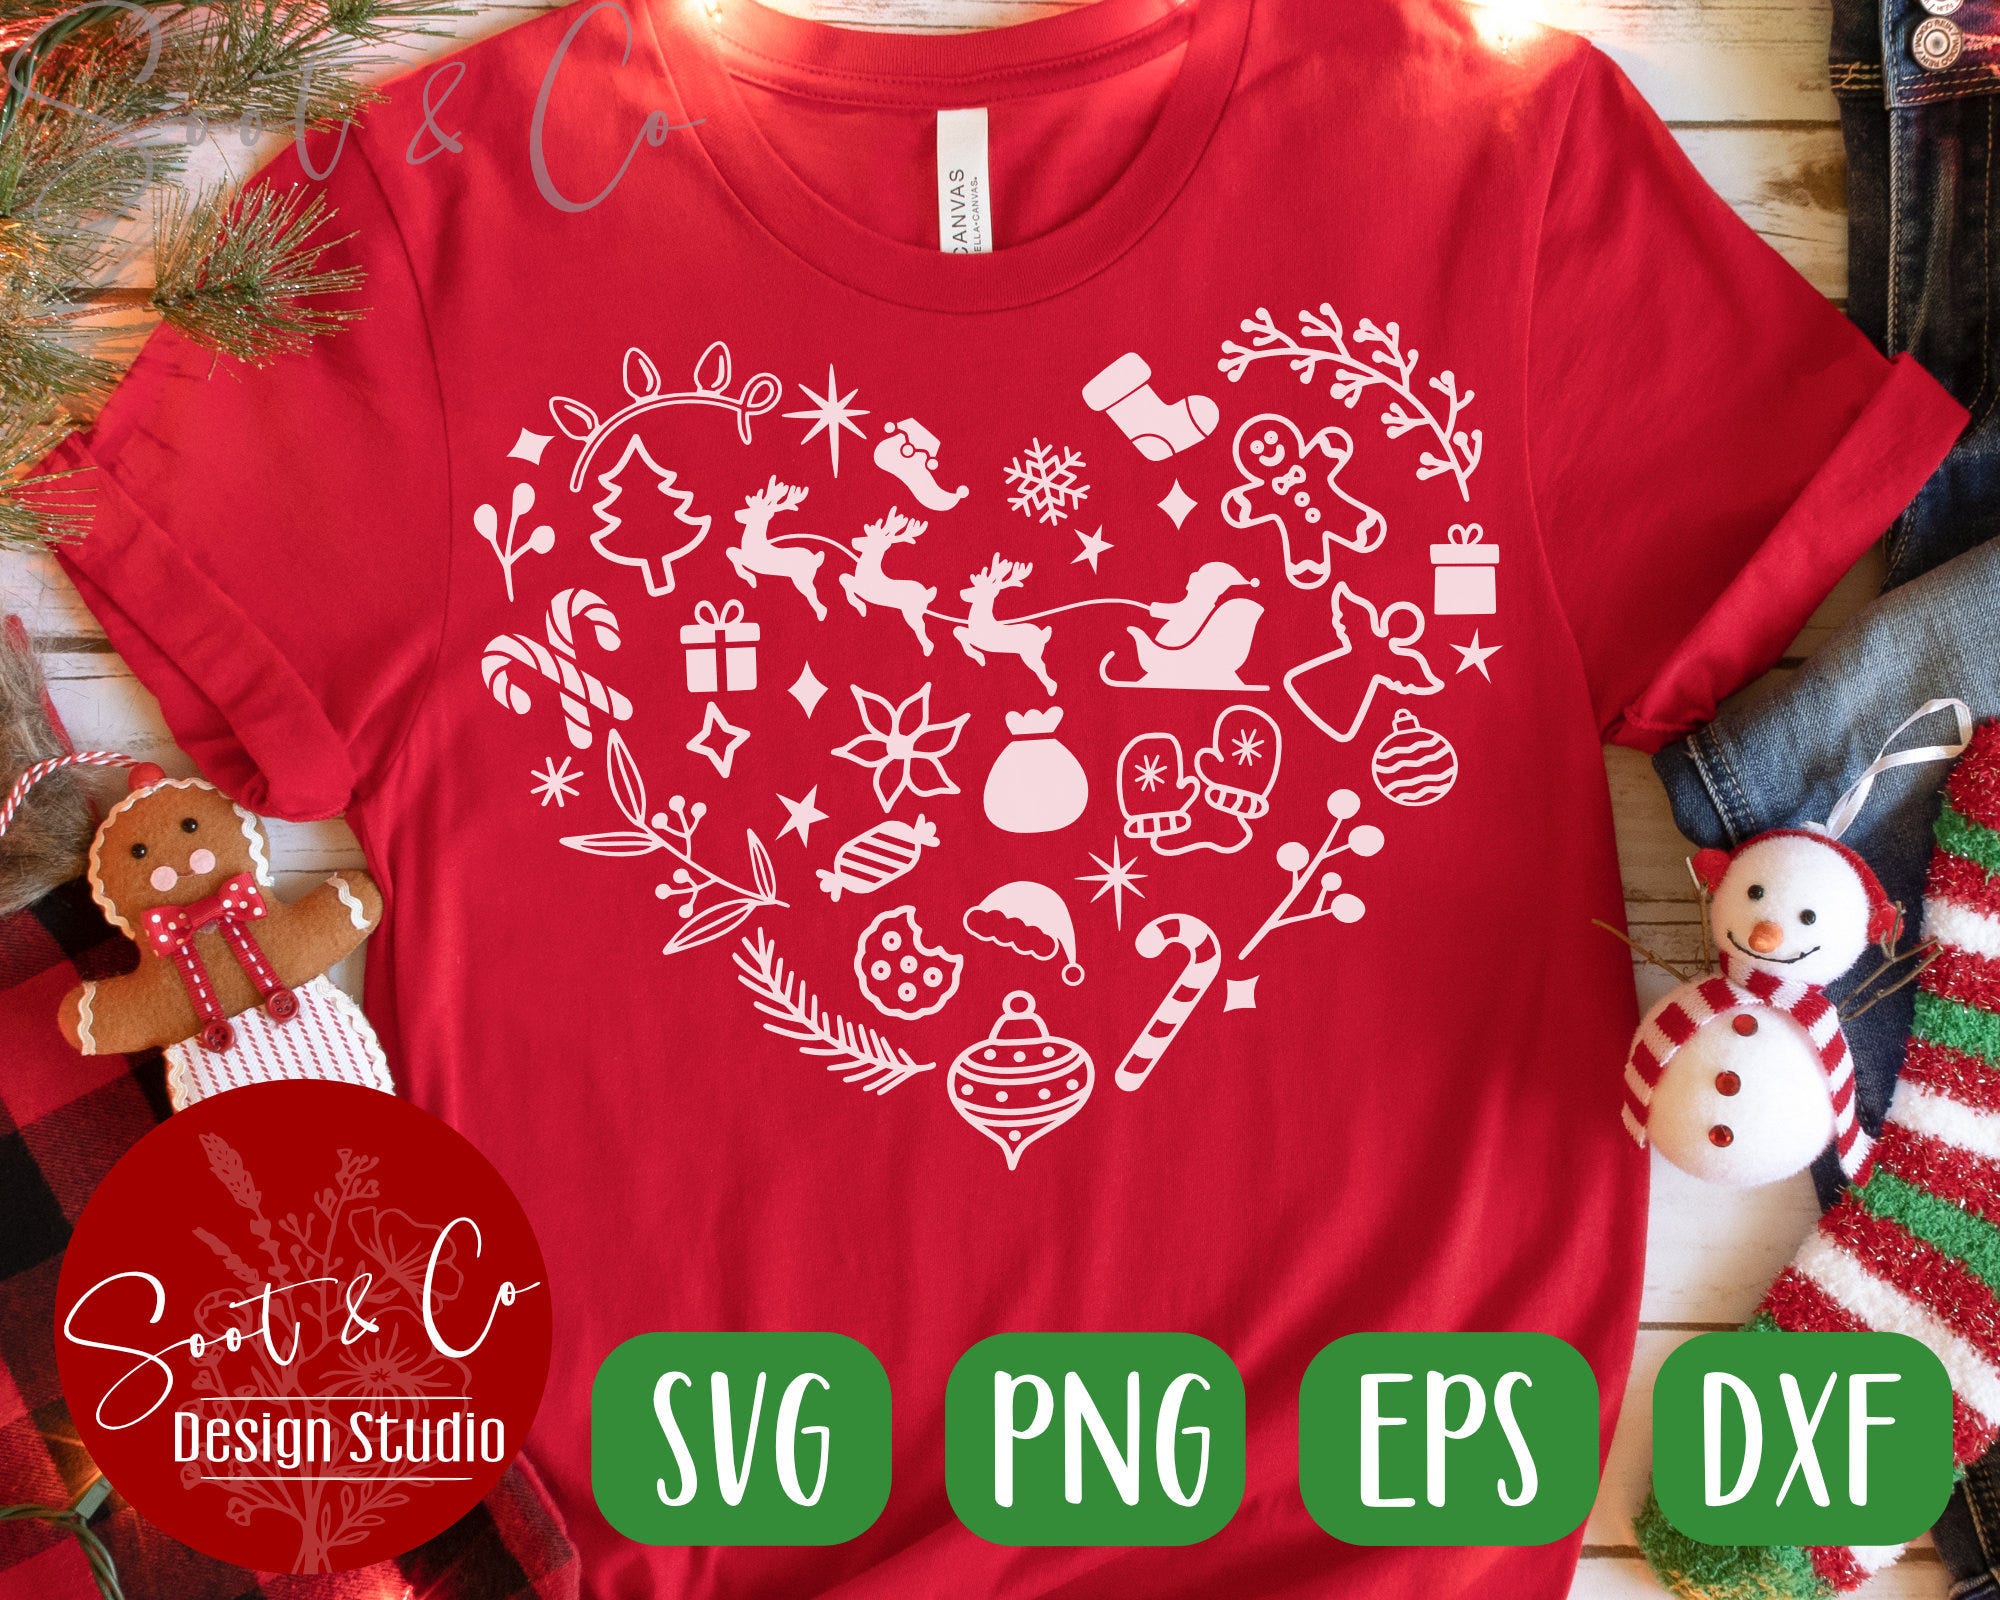 Christmas SVG design - Christmas Heart  SVG file for Cricut - Christmas svg - Christmas sign SVG - Cut file, Stencils, Transfers